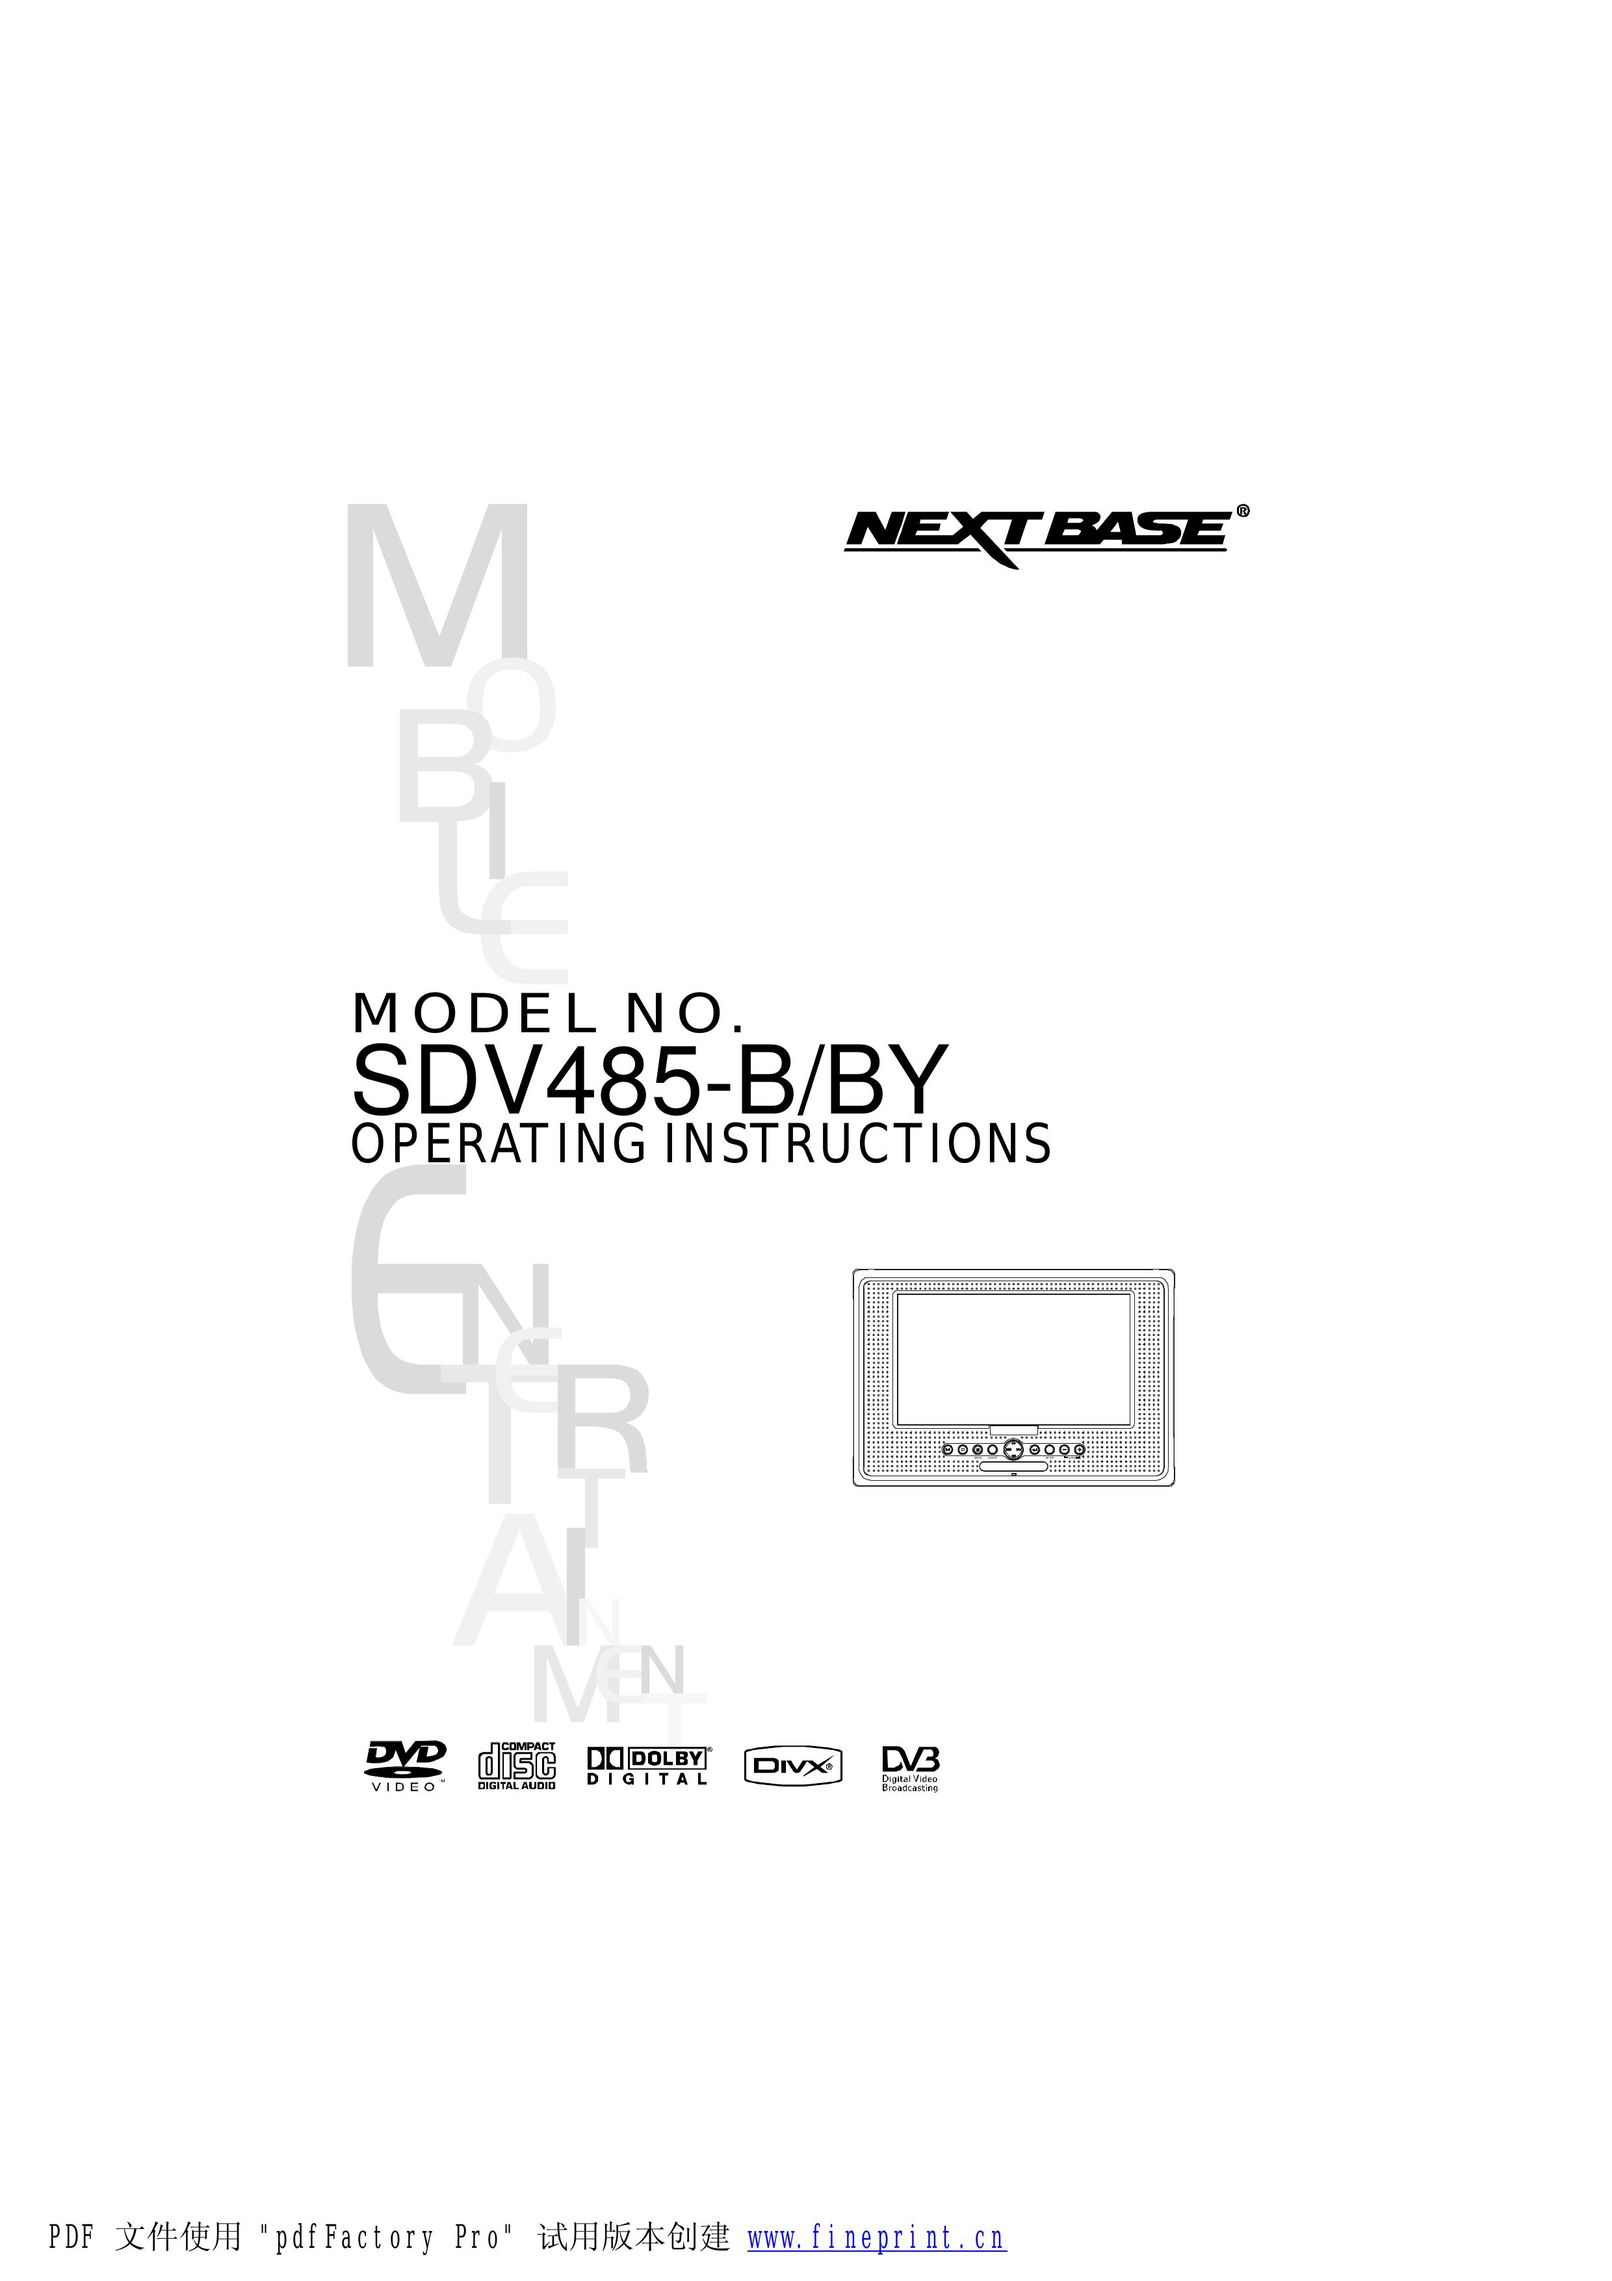 NextBase SDV485-B Portable DVD Player User Manual